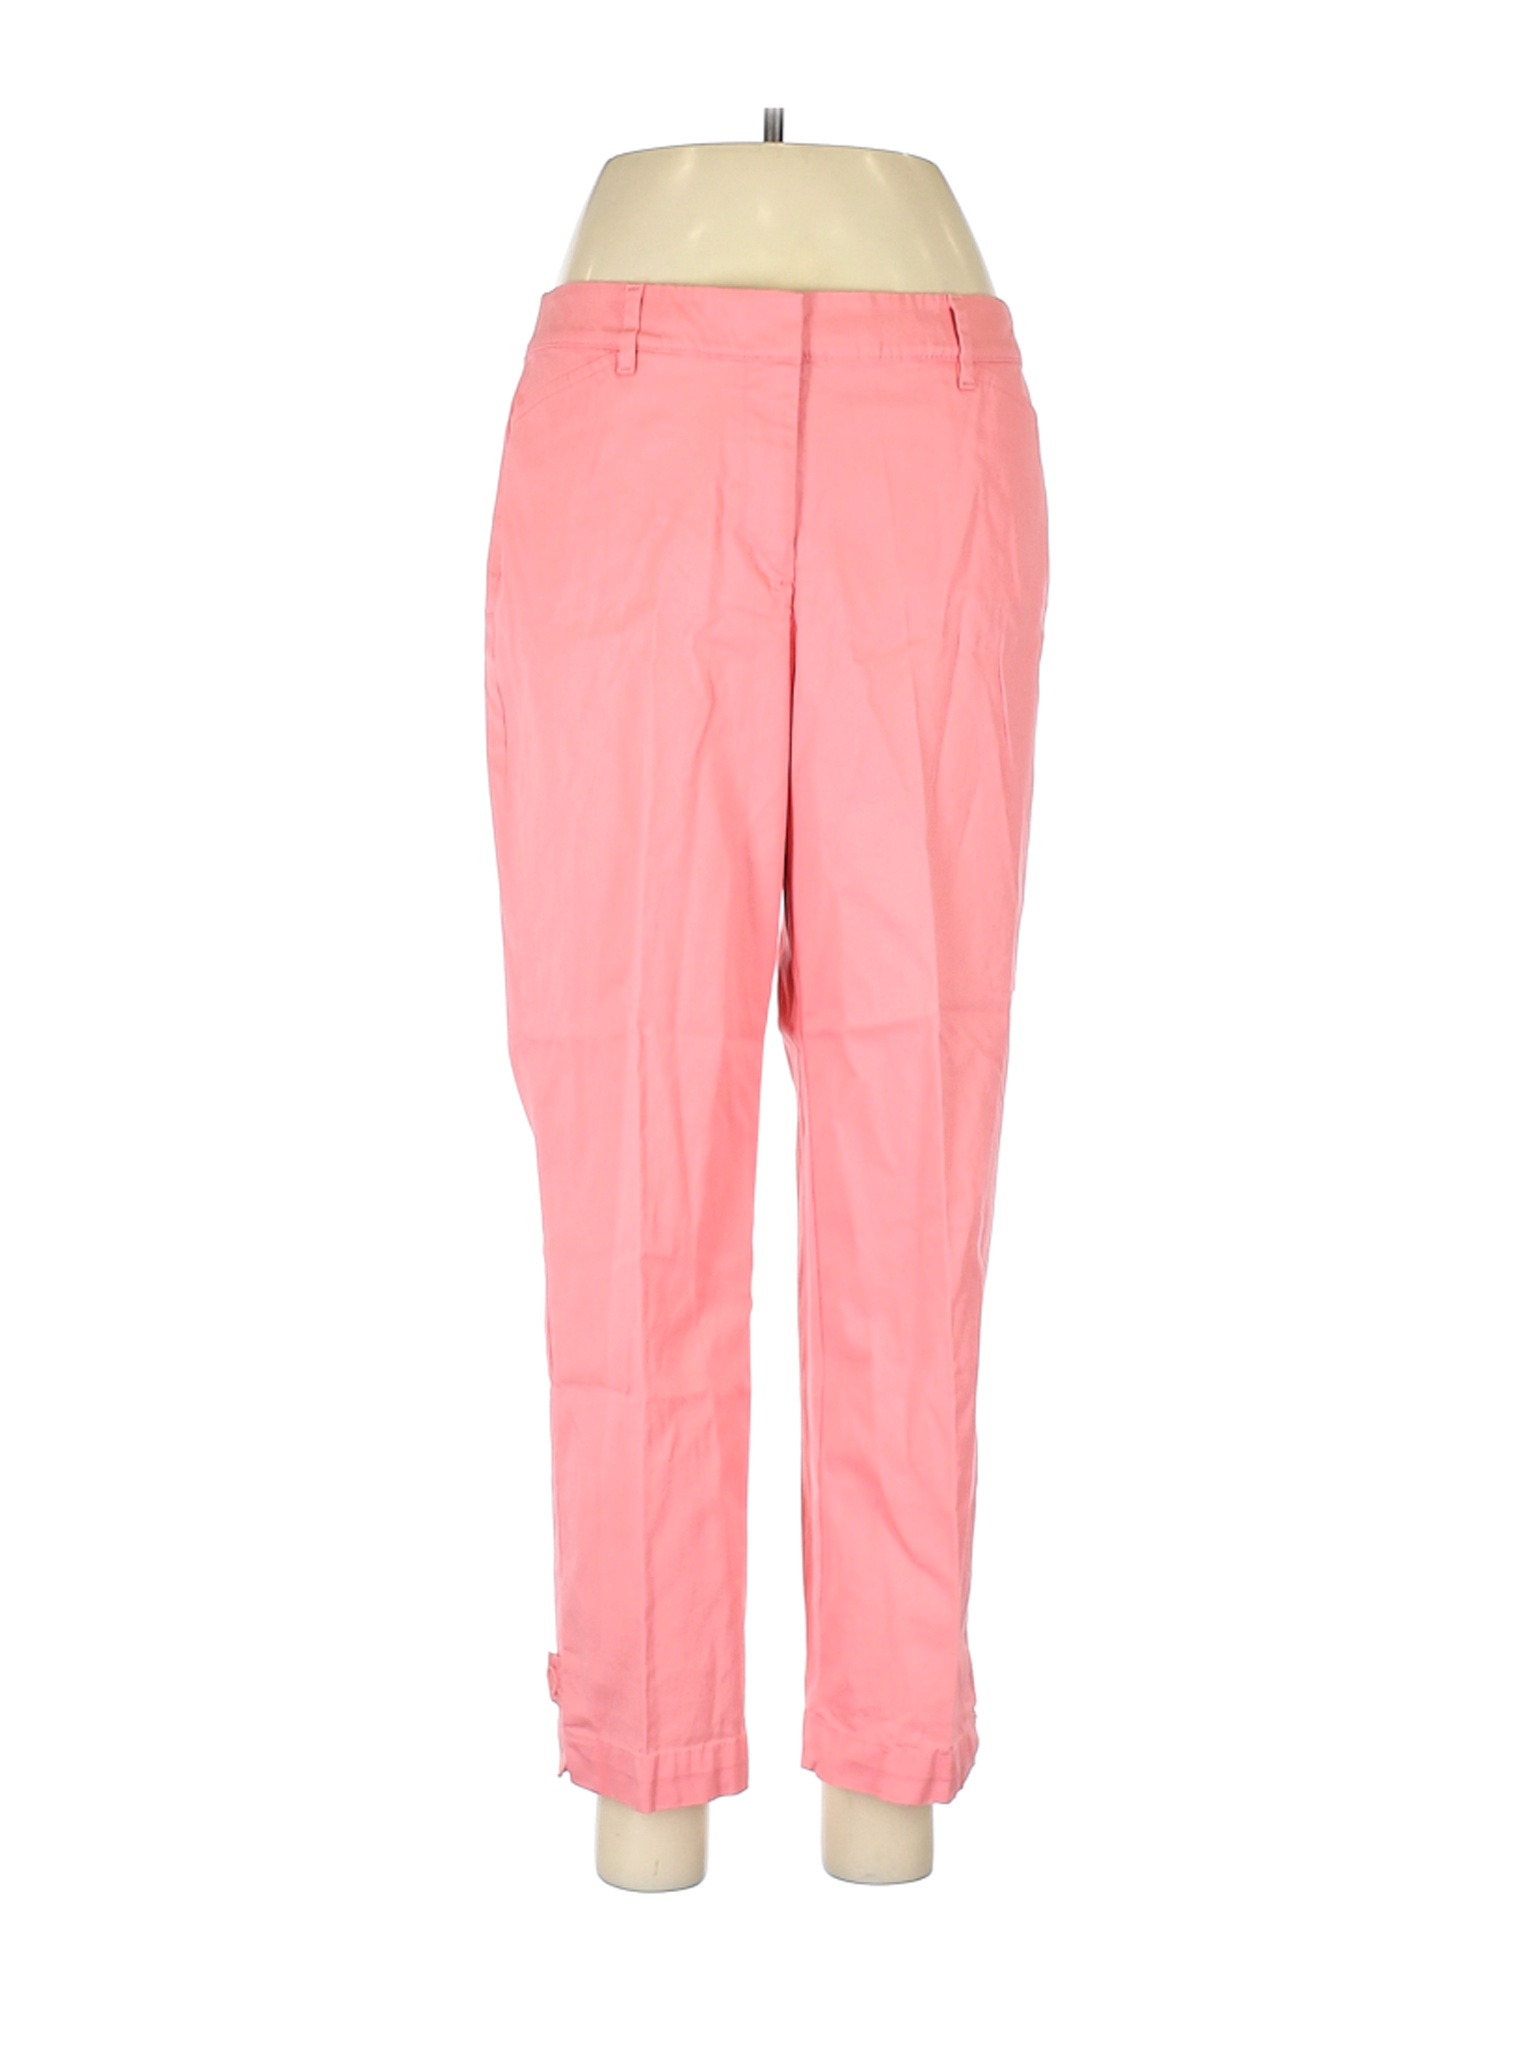 Talbots Women Pink Dress Pants 6 | eBay